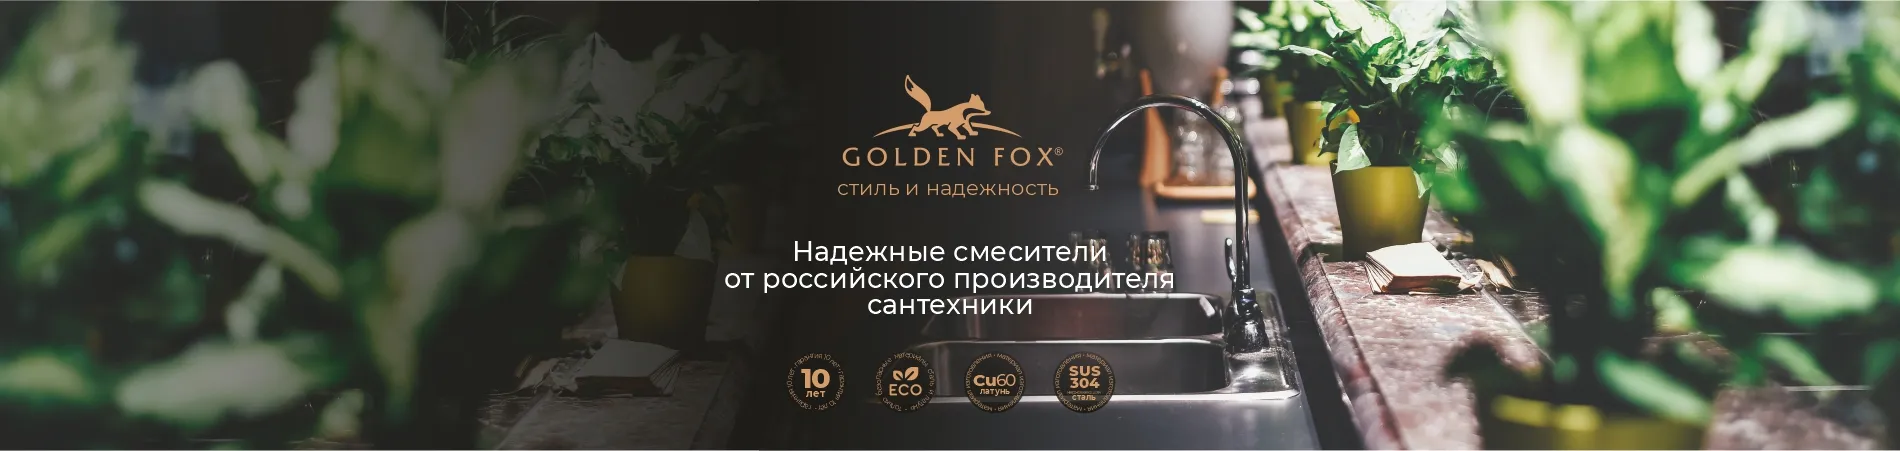 Баннер GOLDEN FOX